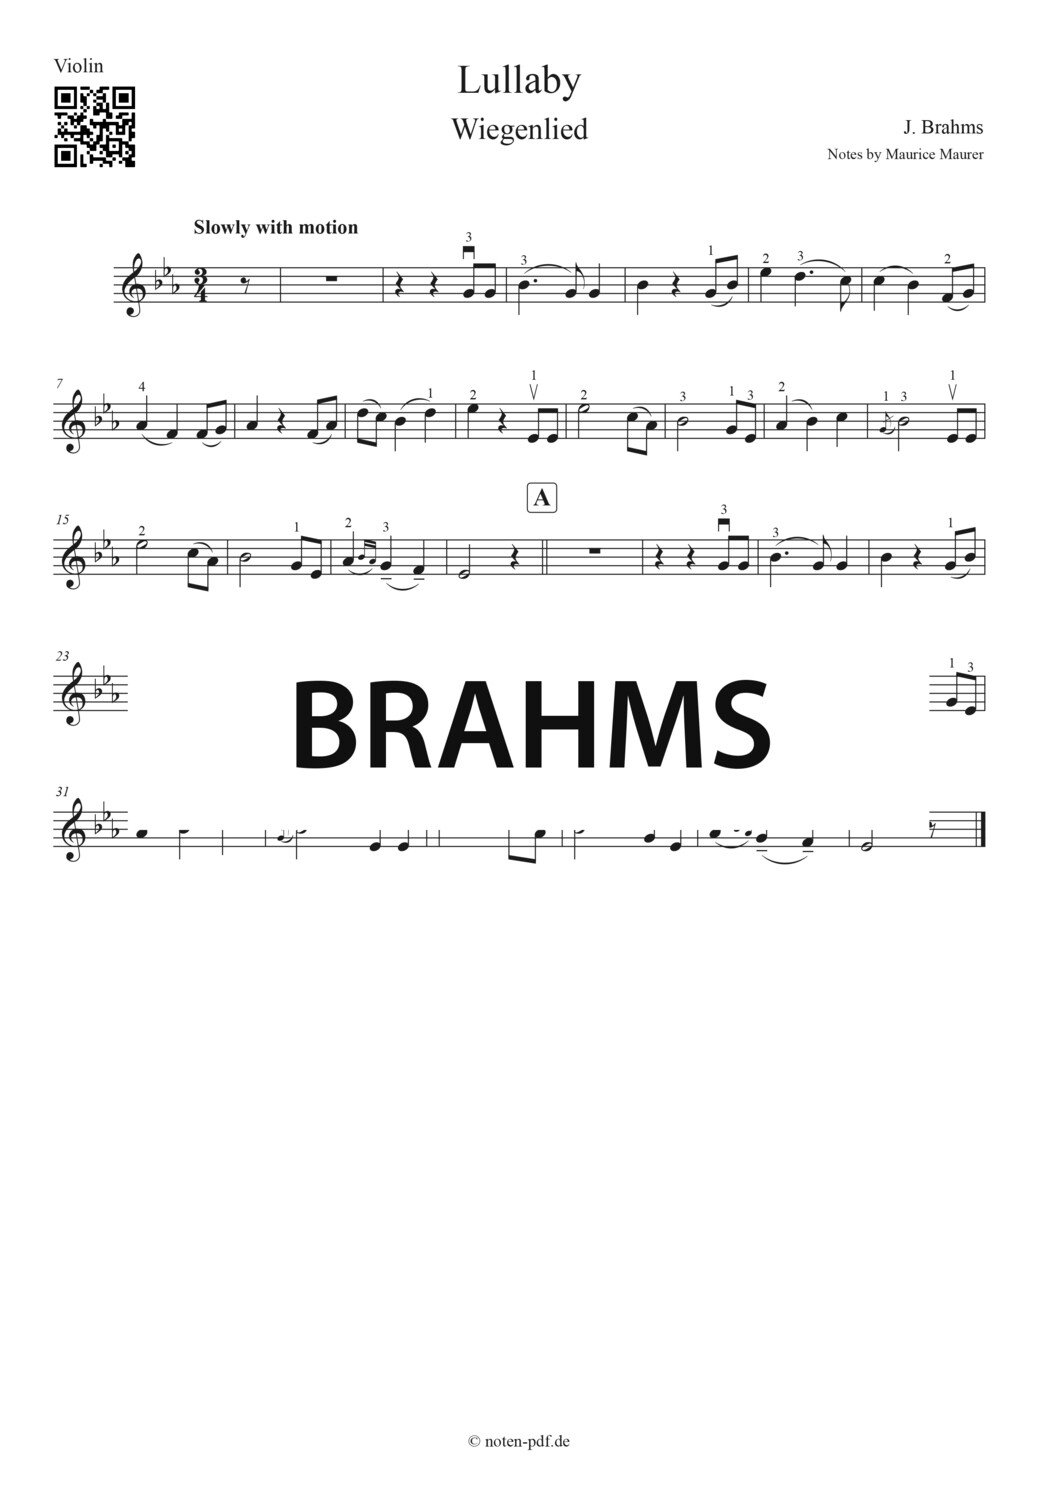 Brahms: Lullaby / Wiegenlied (Violin Sheet Music)